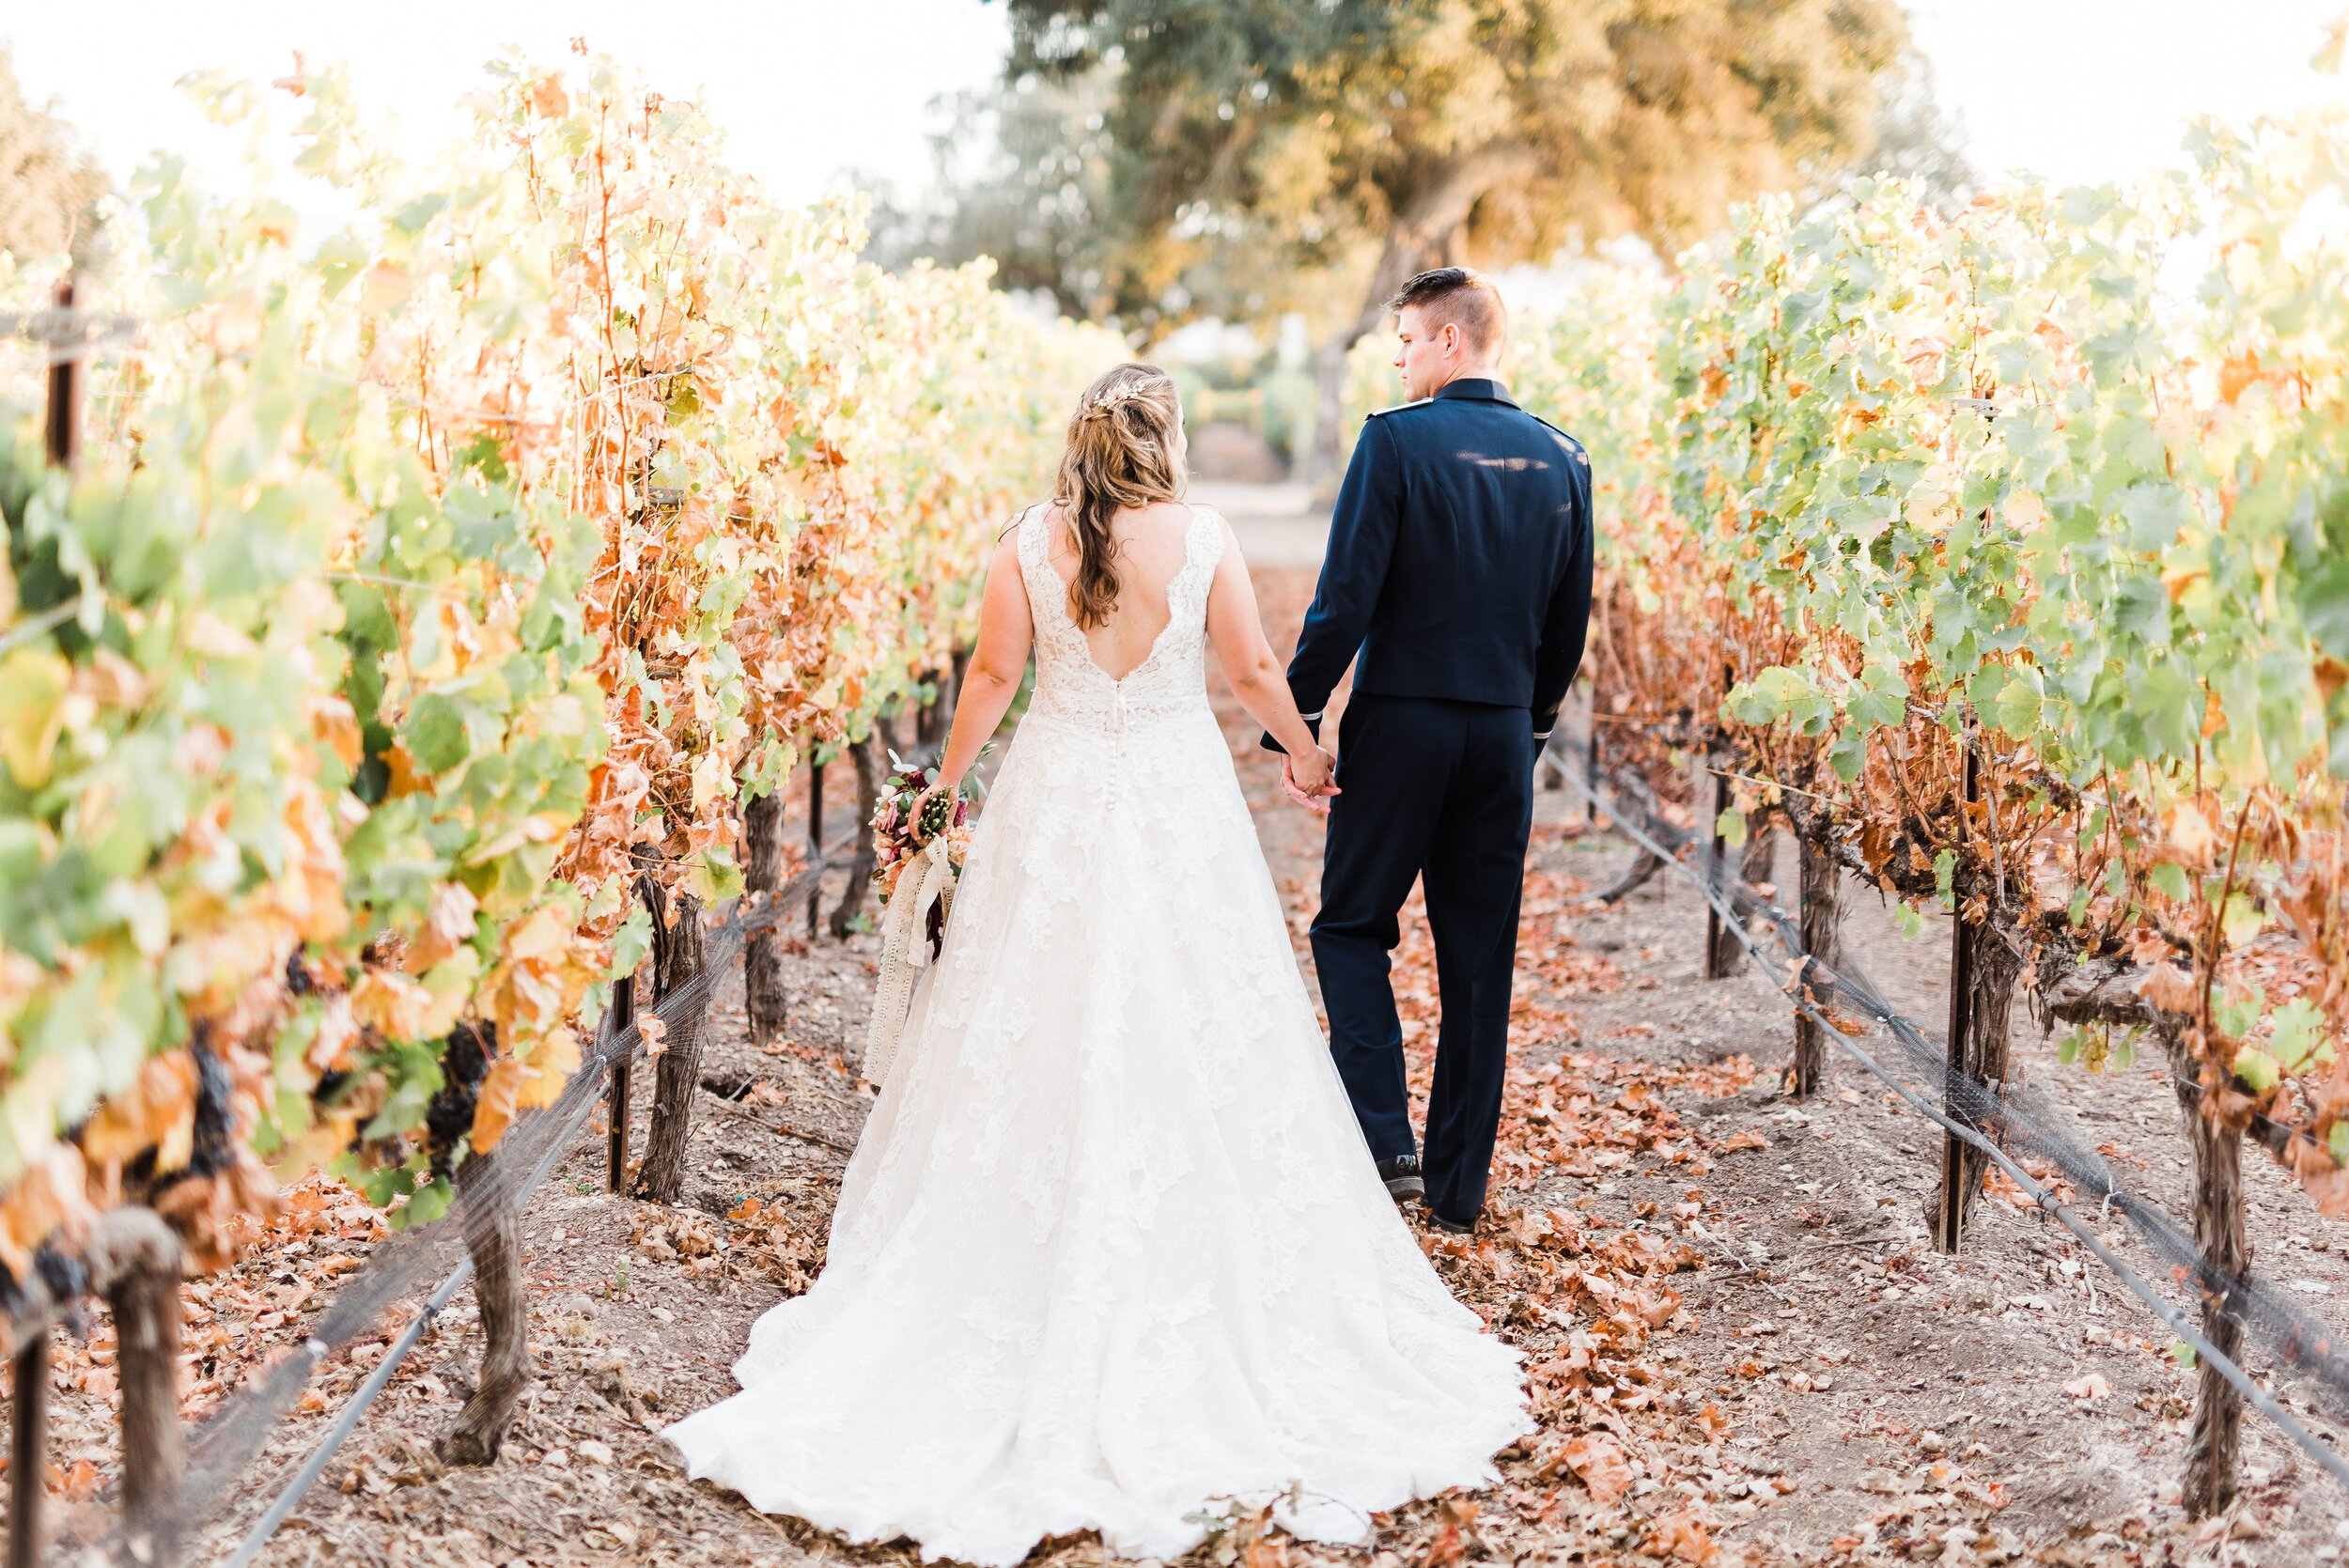 www.santabarbarawedding.com | Roblar Winery and Farm | Brittany Taylor Photography | Bride and Groom Stroll Through the Vineyard